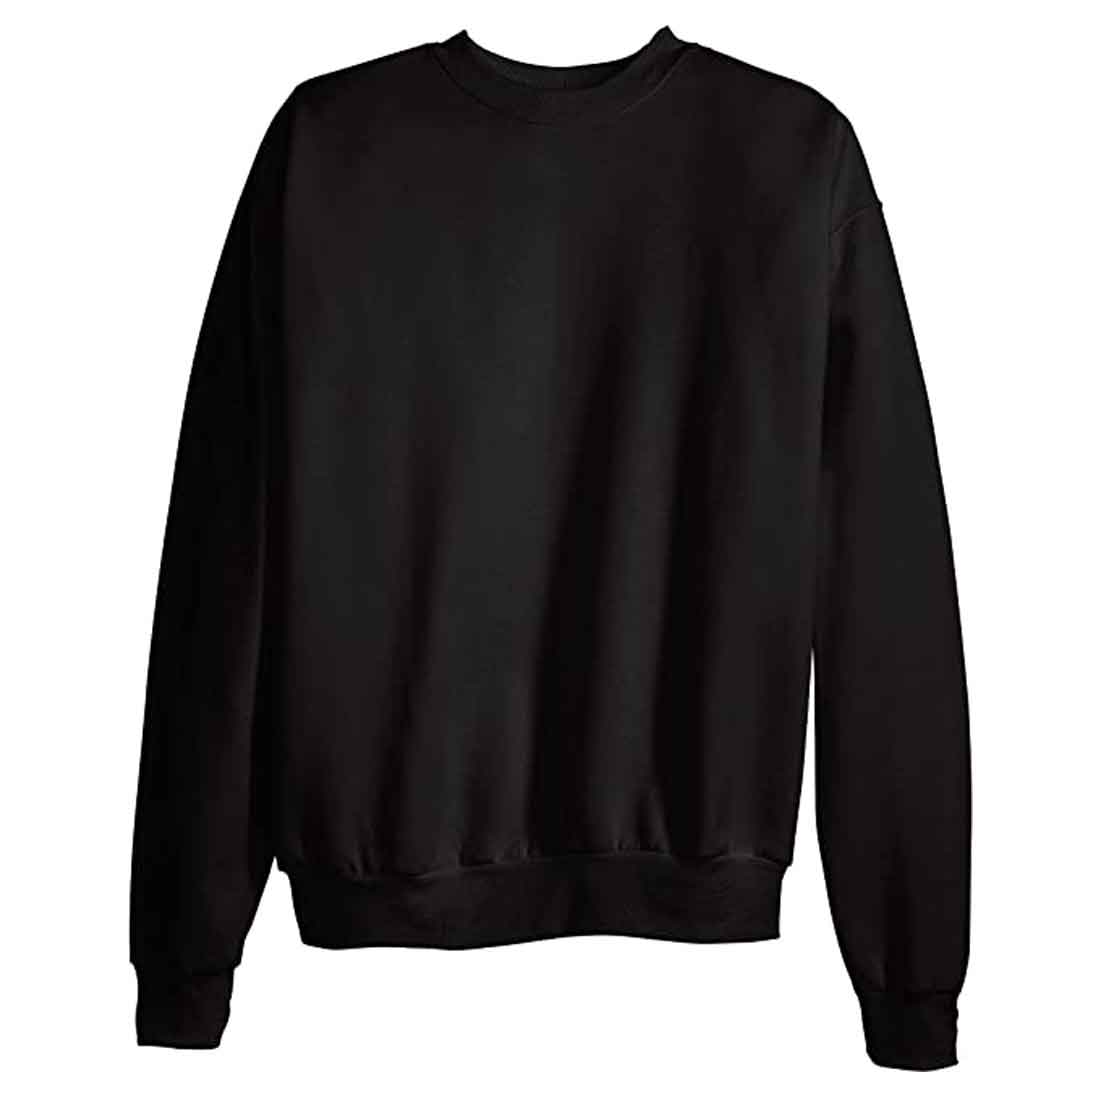 Black Sweatshirt Full Sleeve Stylish Latest for Unisex - Taurus